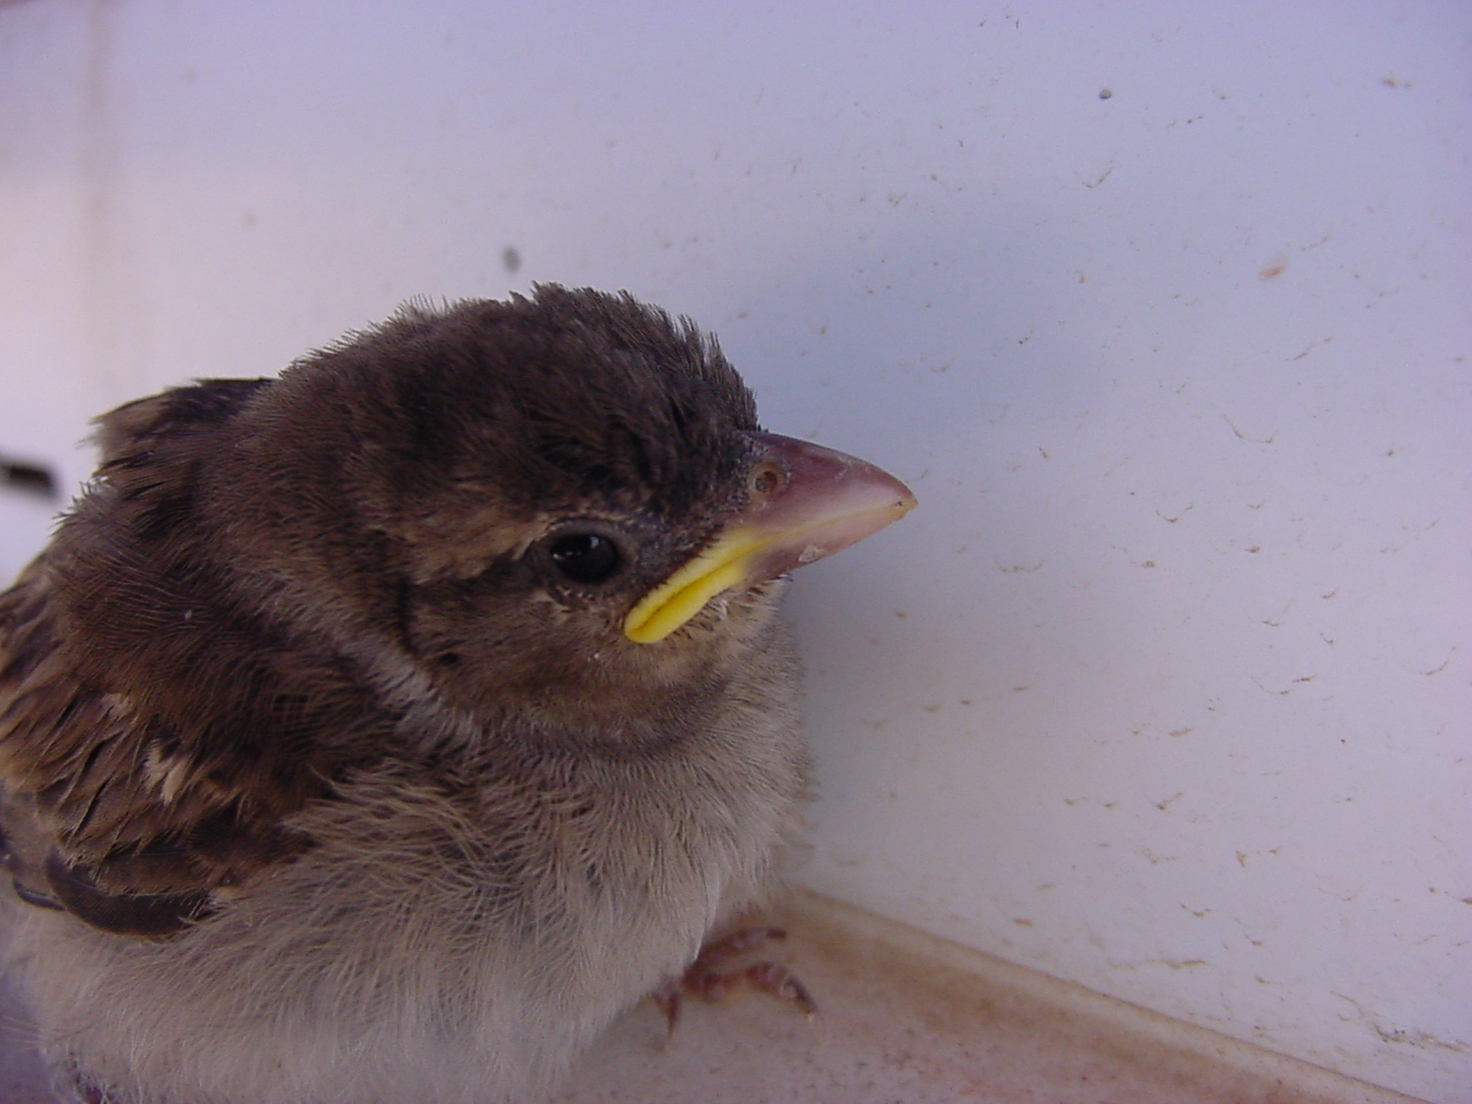 insektokutor baby bird chick feathers beak small young